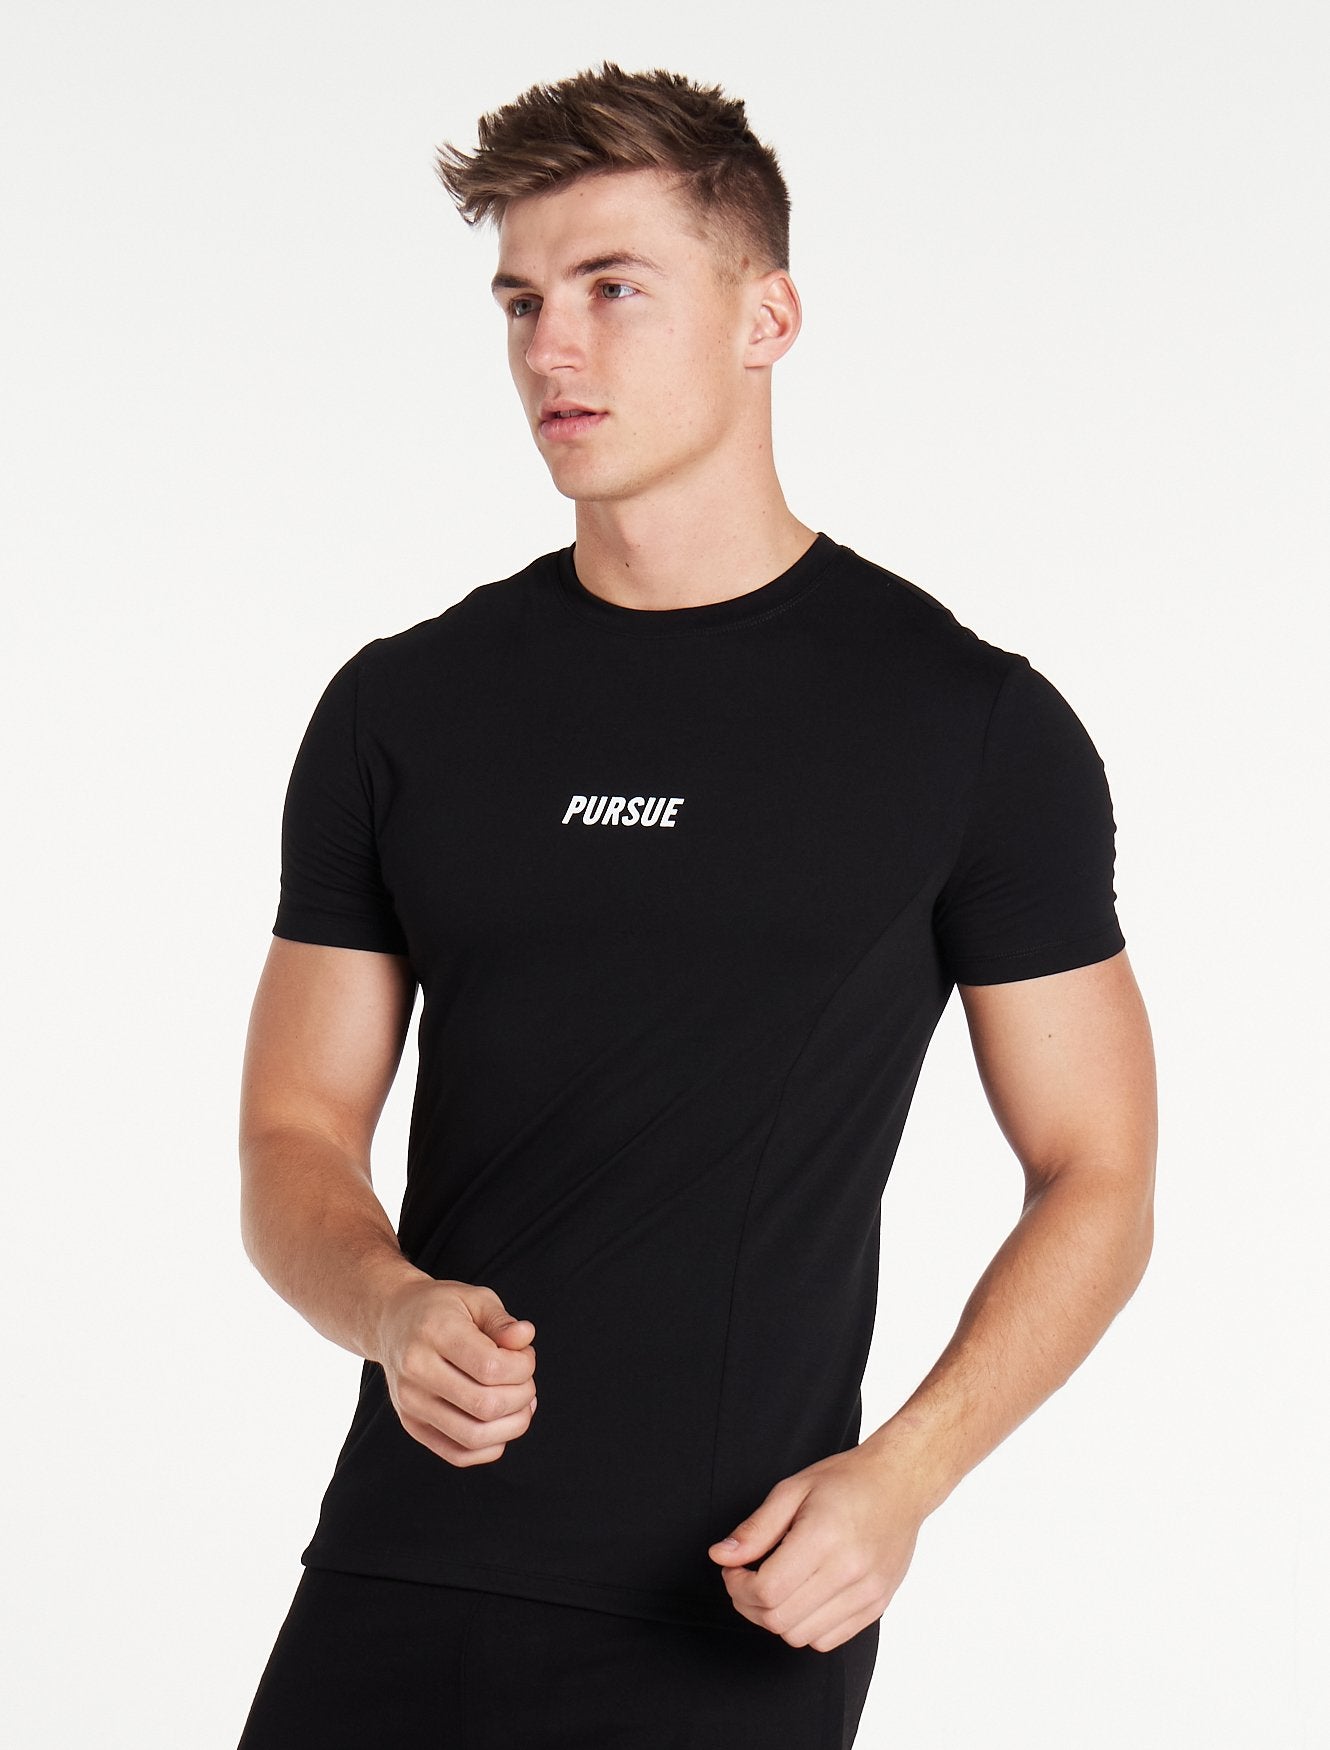 Essential T-Shirt / Black Pursue Fitness 5